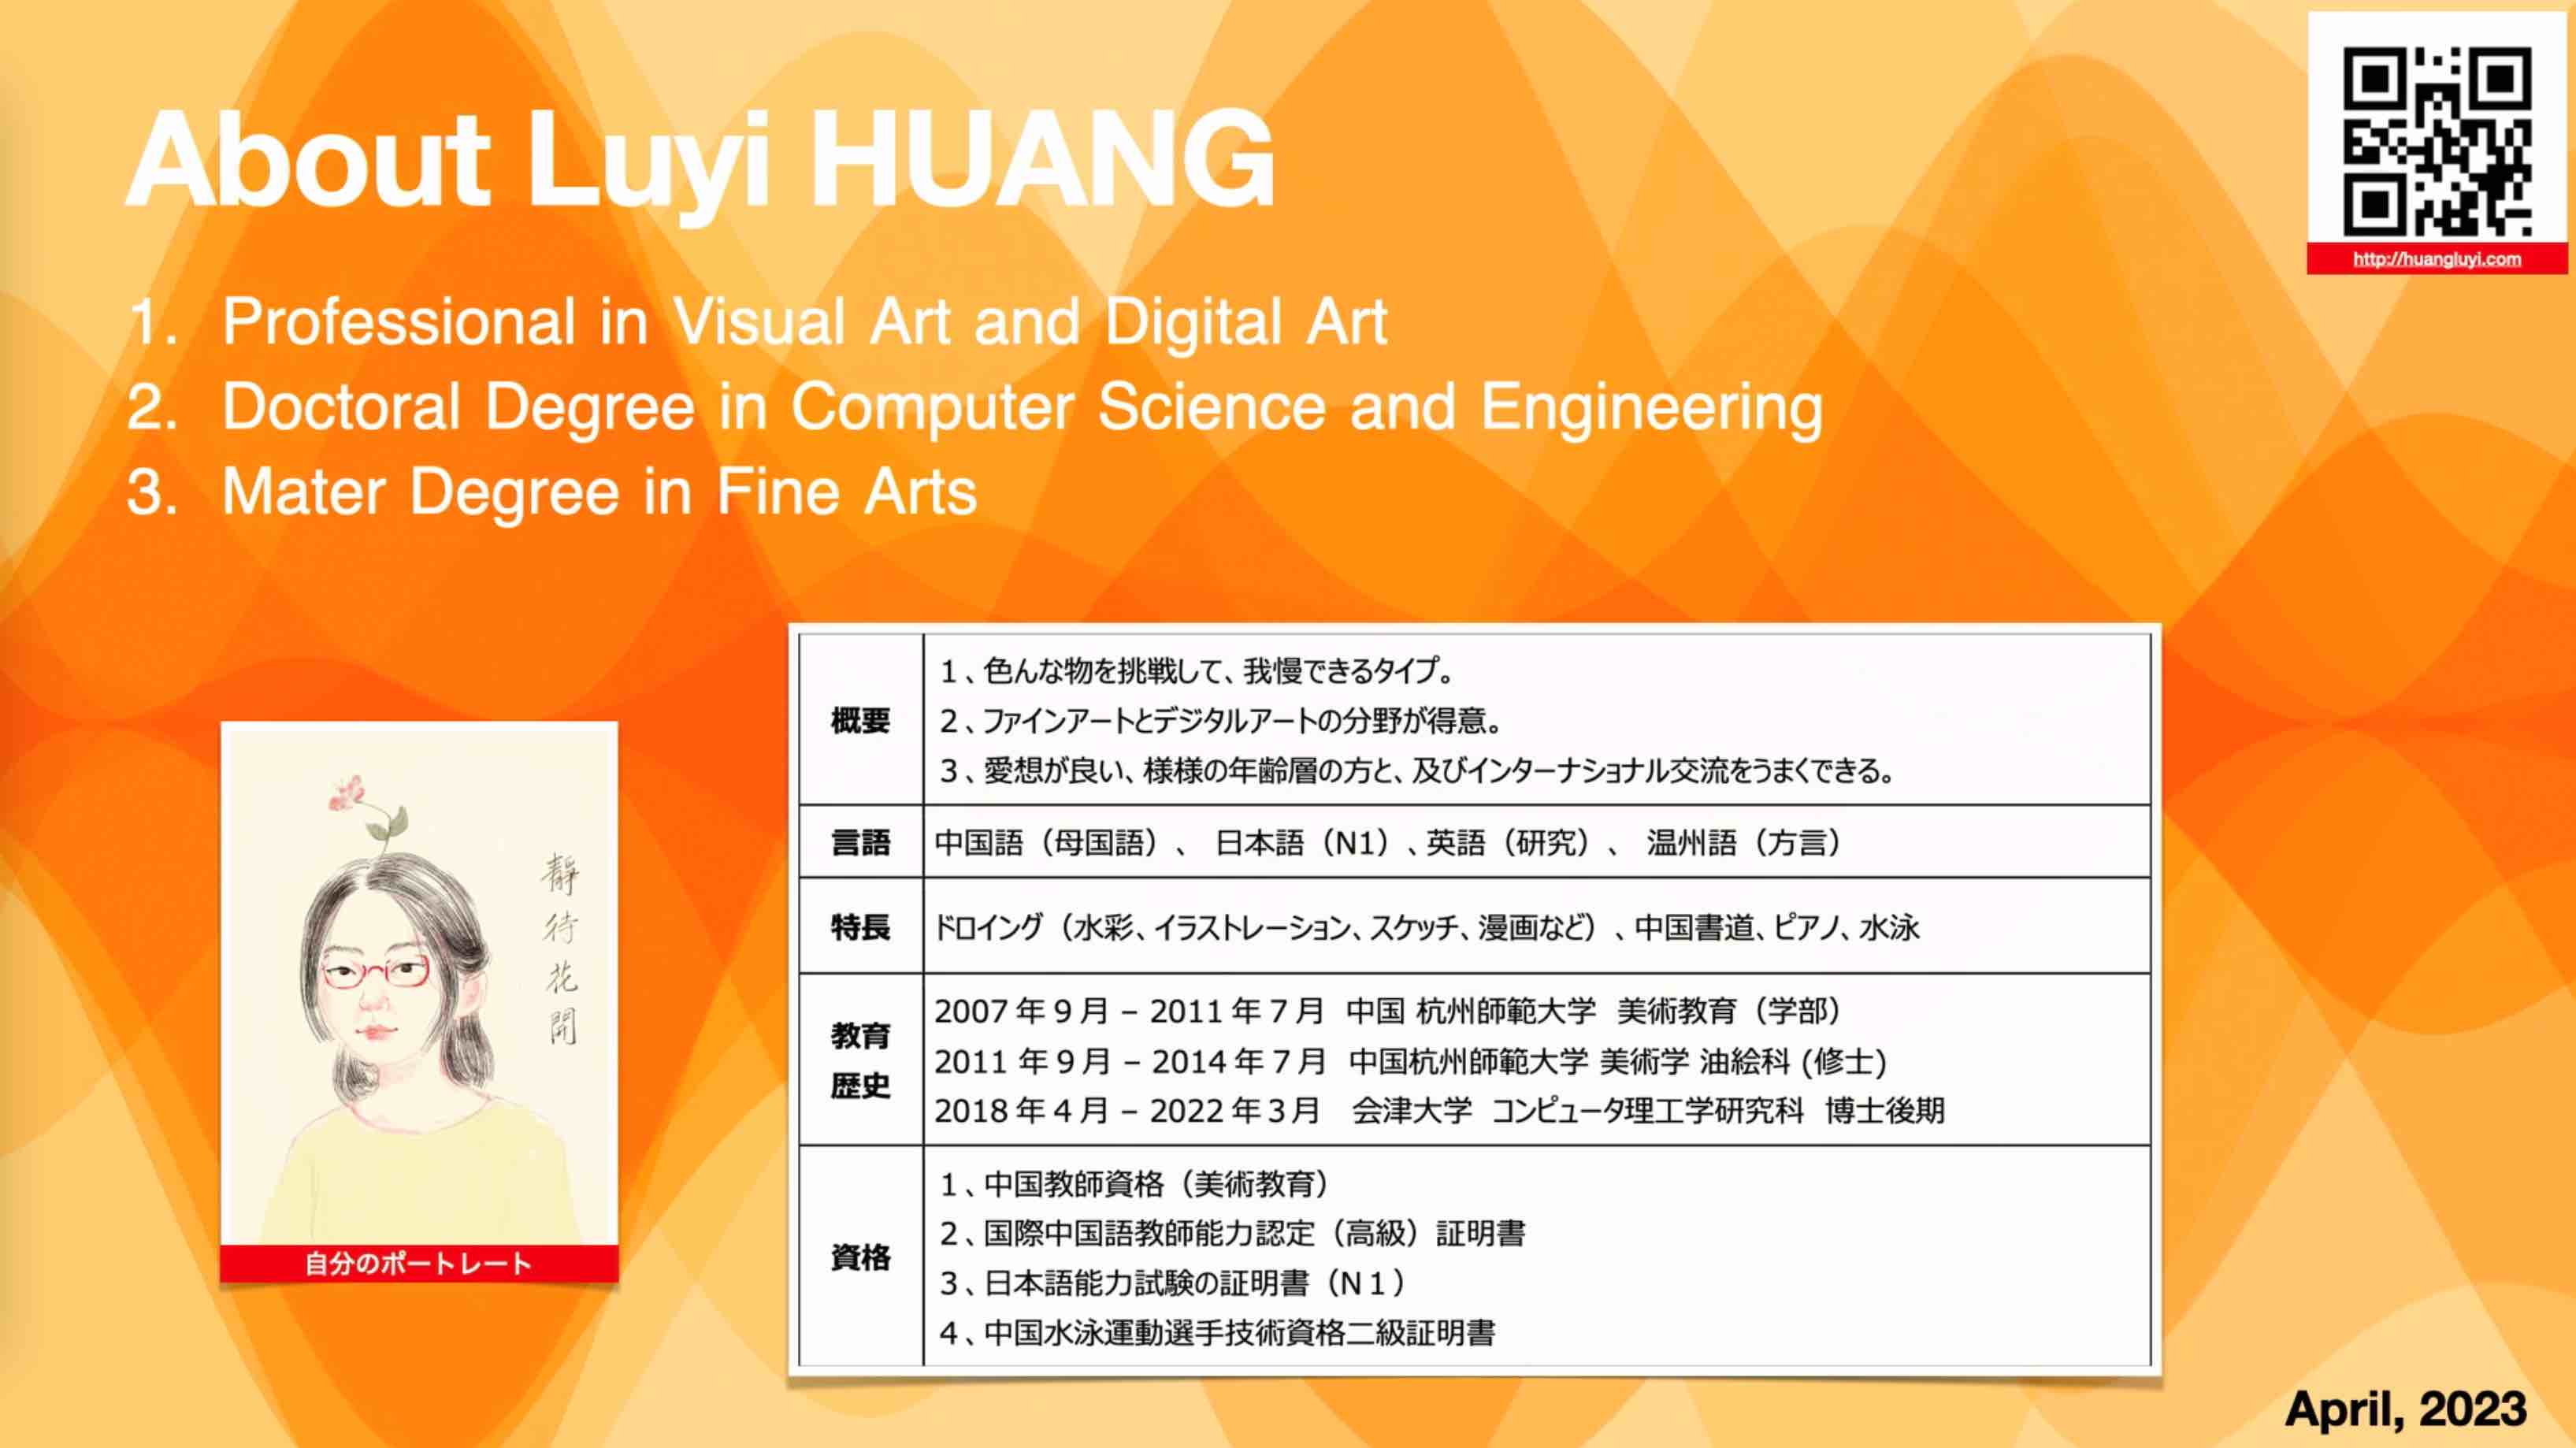 L. HUANG's Profile